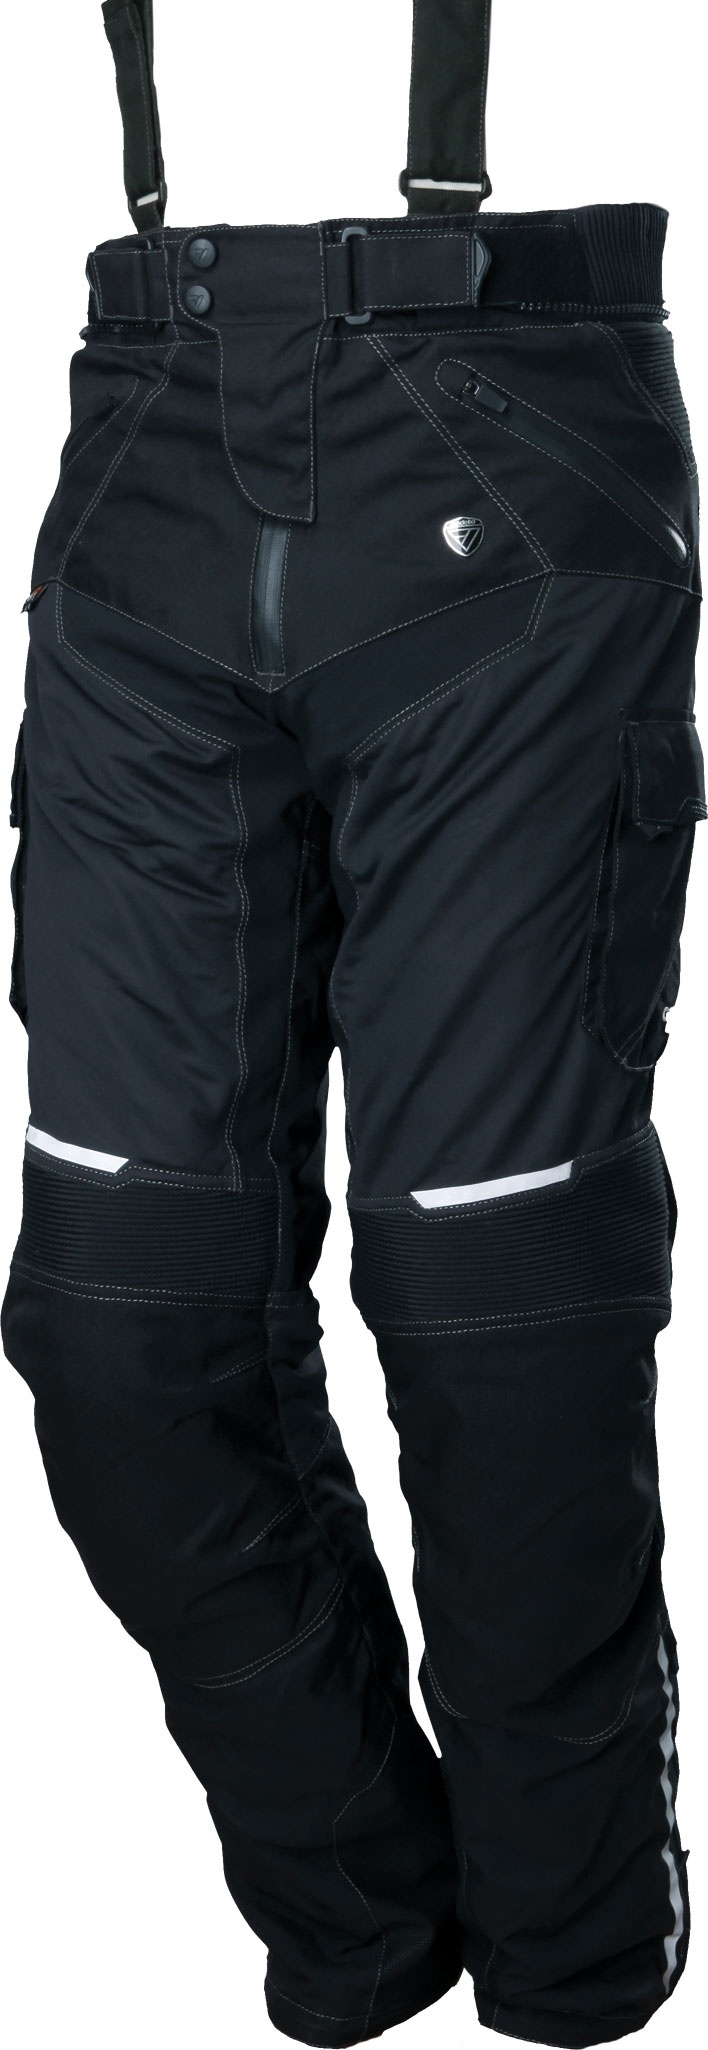 Modeka AFT-Touring, pantalon textile - Noir - 5XL